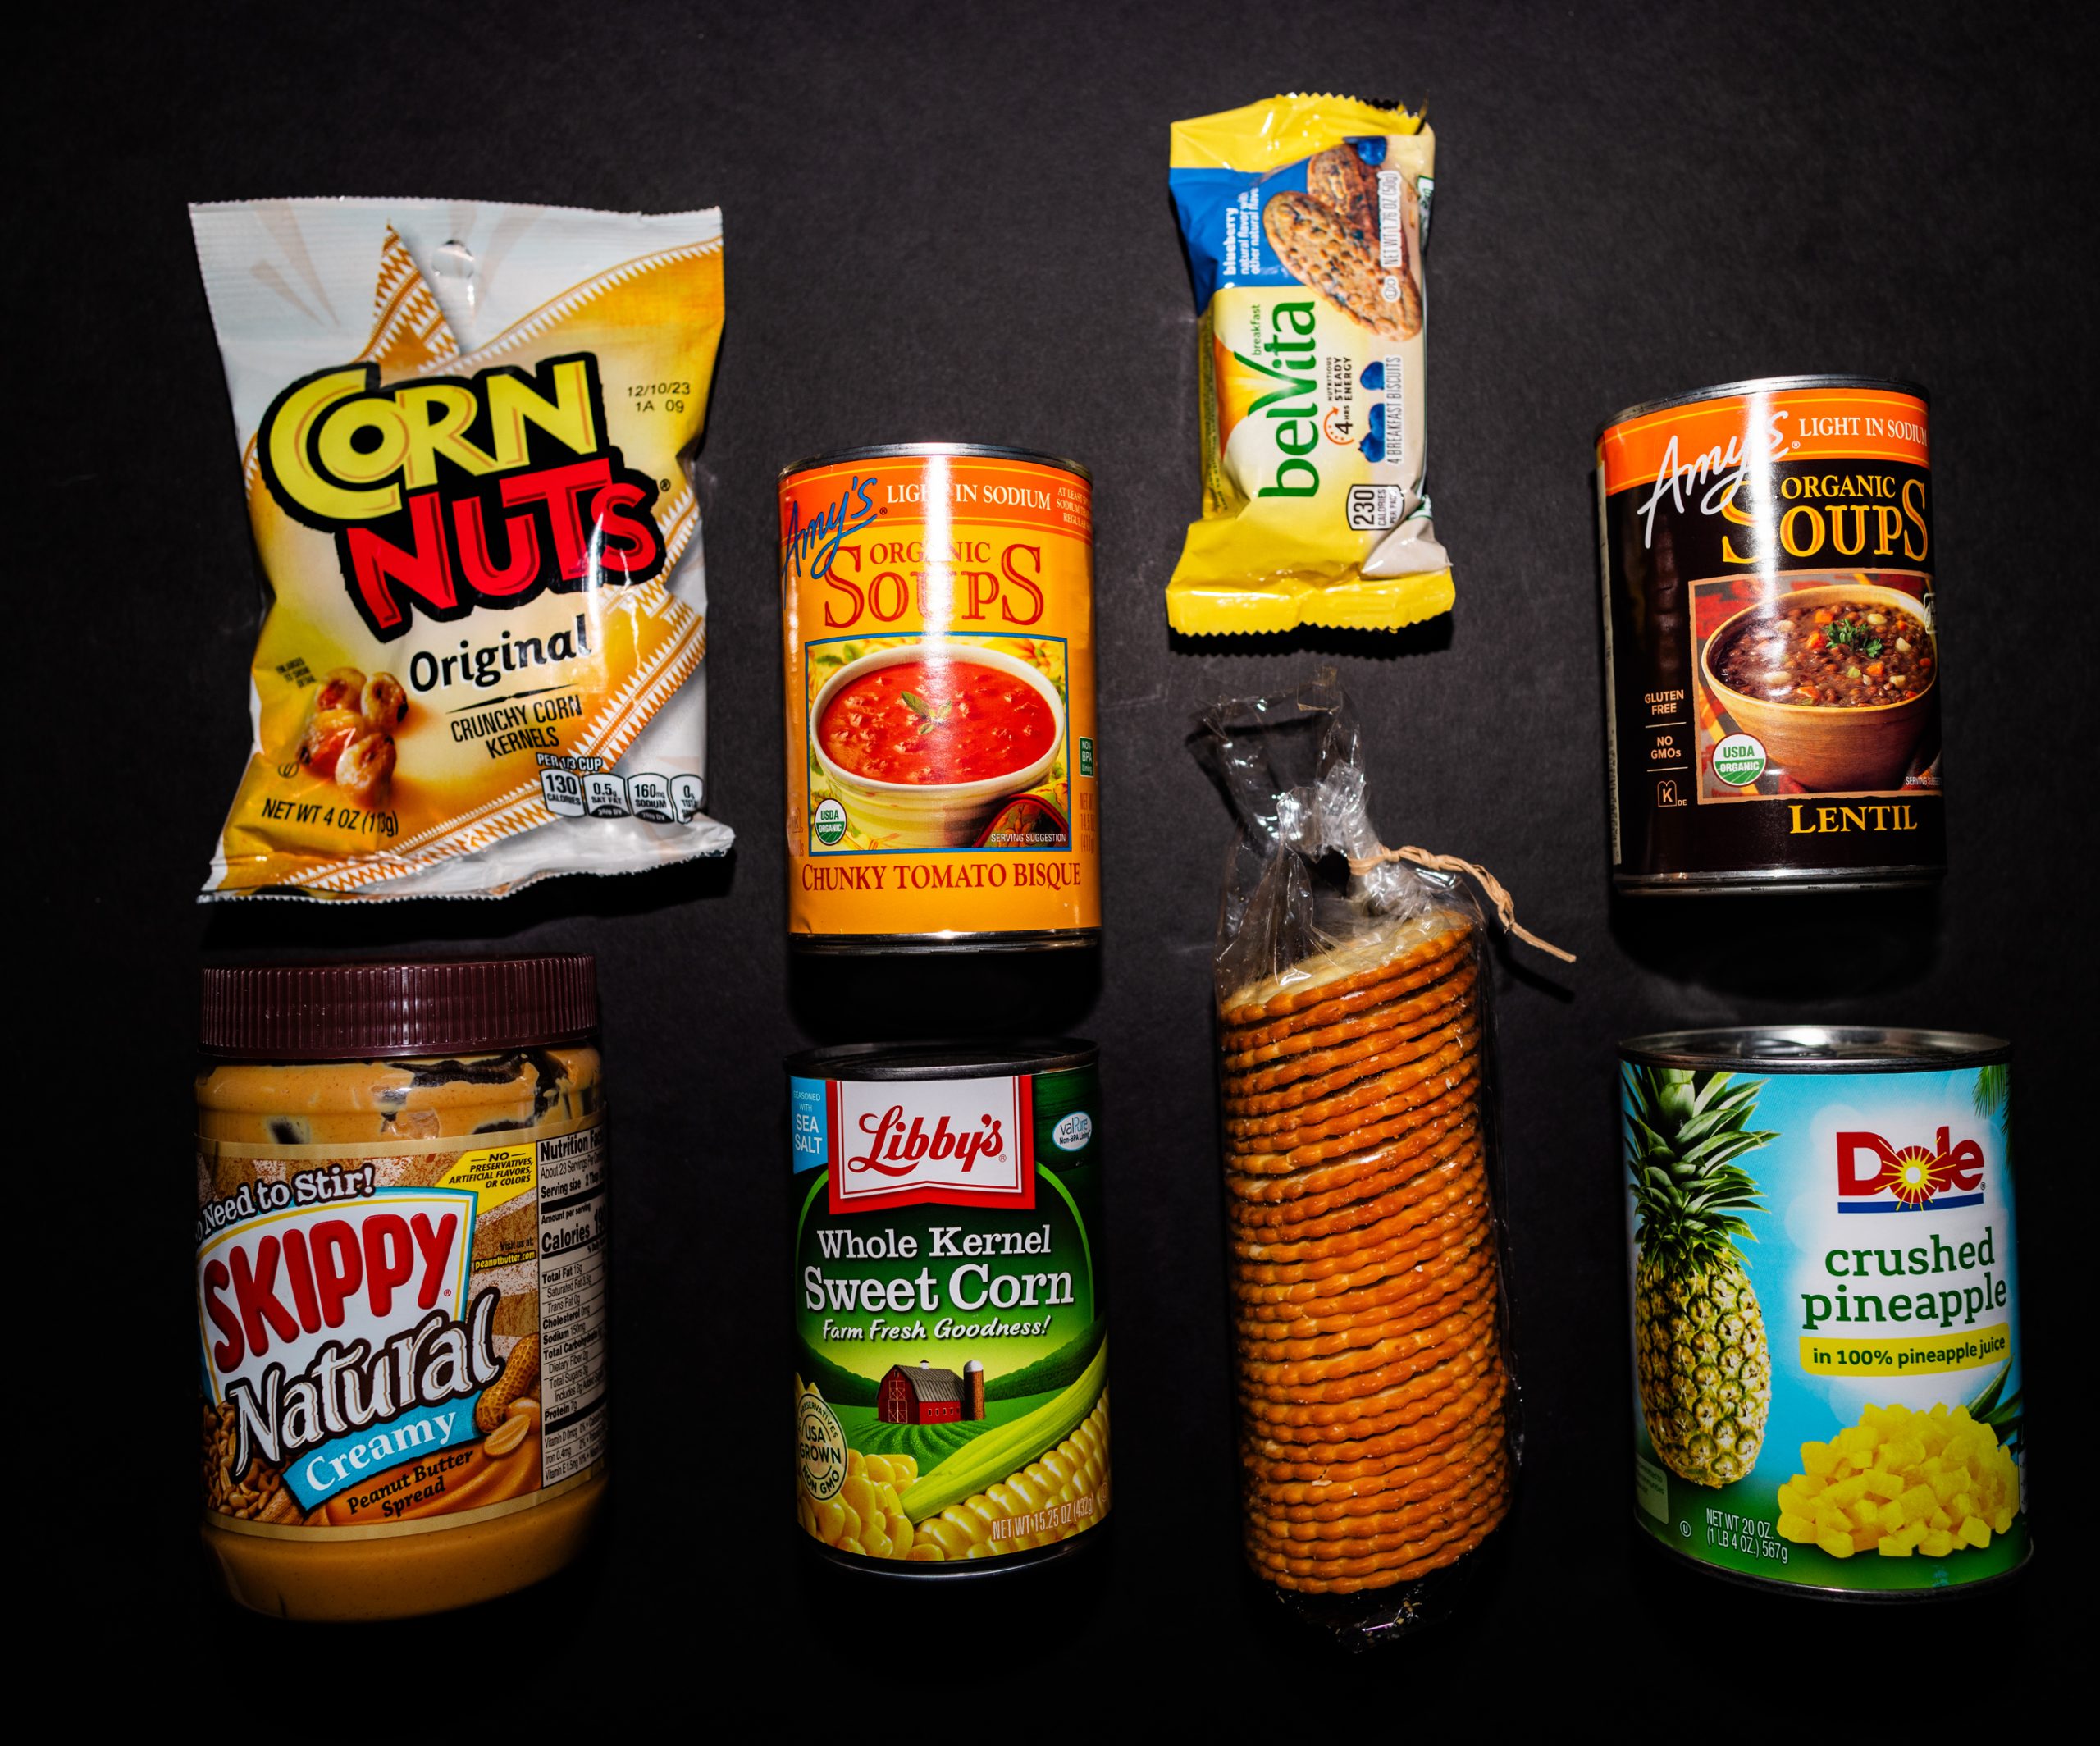 Emergency food supplies for hurricane season